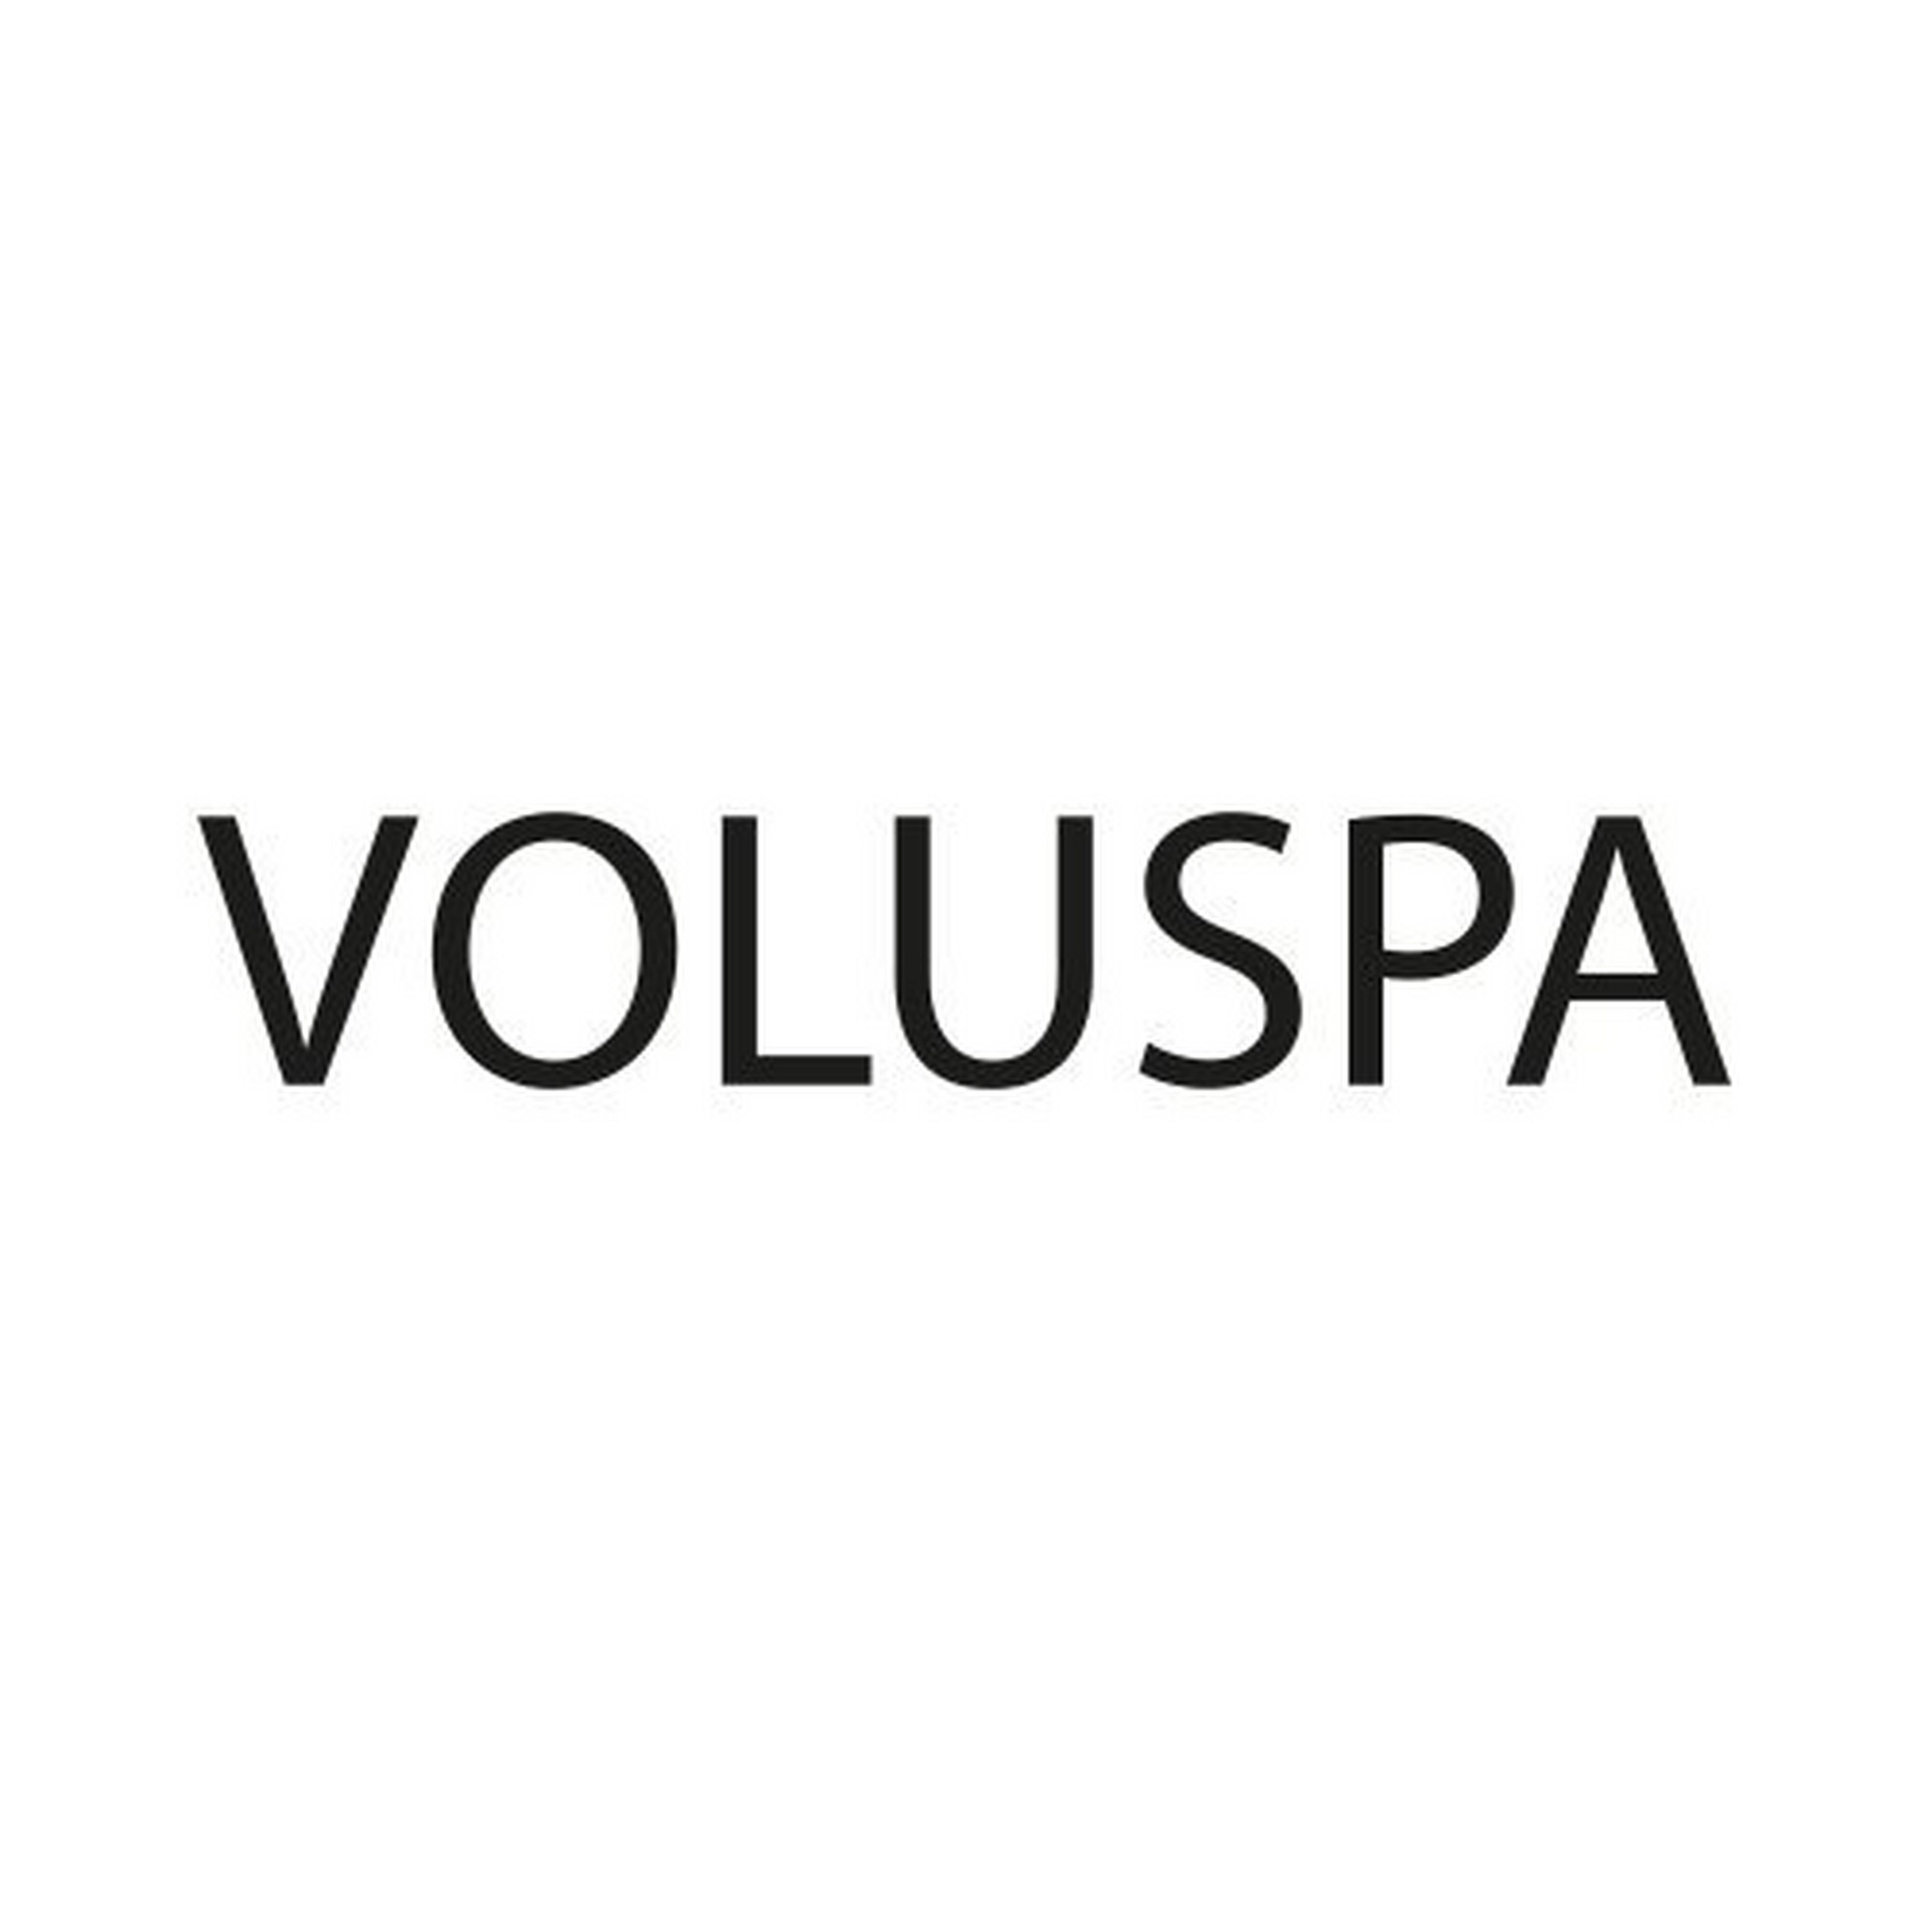 Voluspa logotype